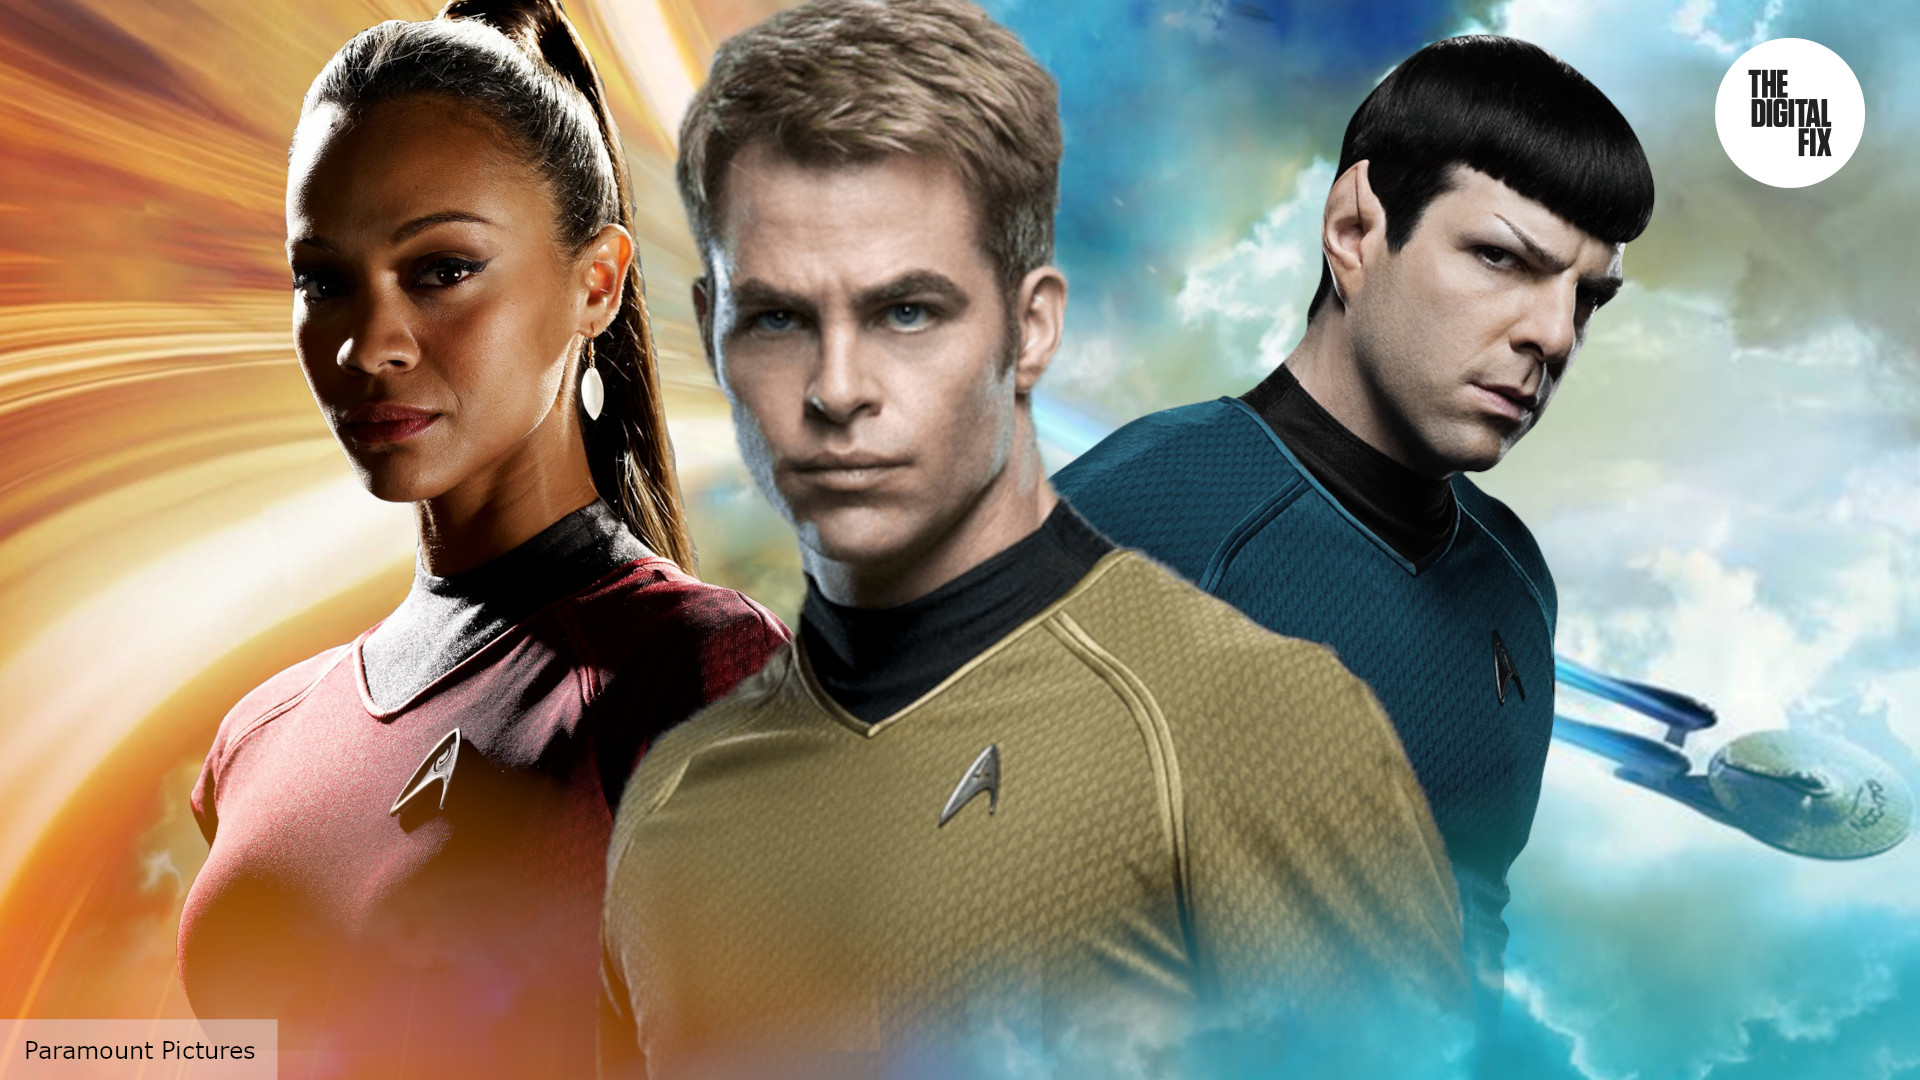 Star Trek 4 release date estimate and latest news